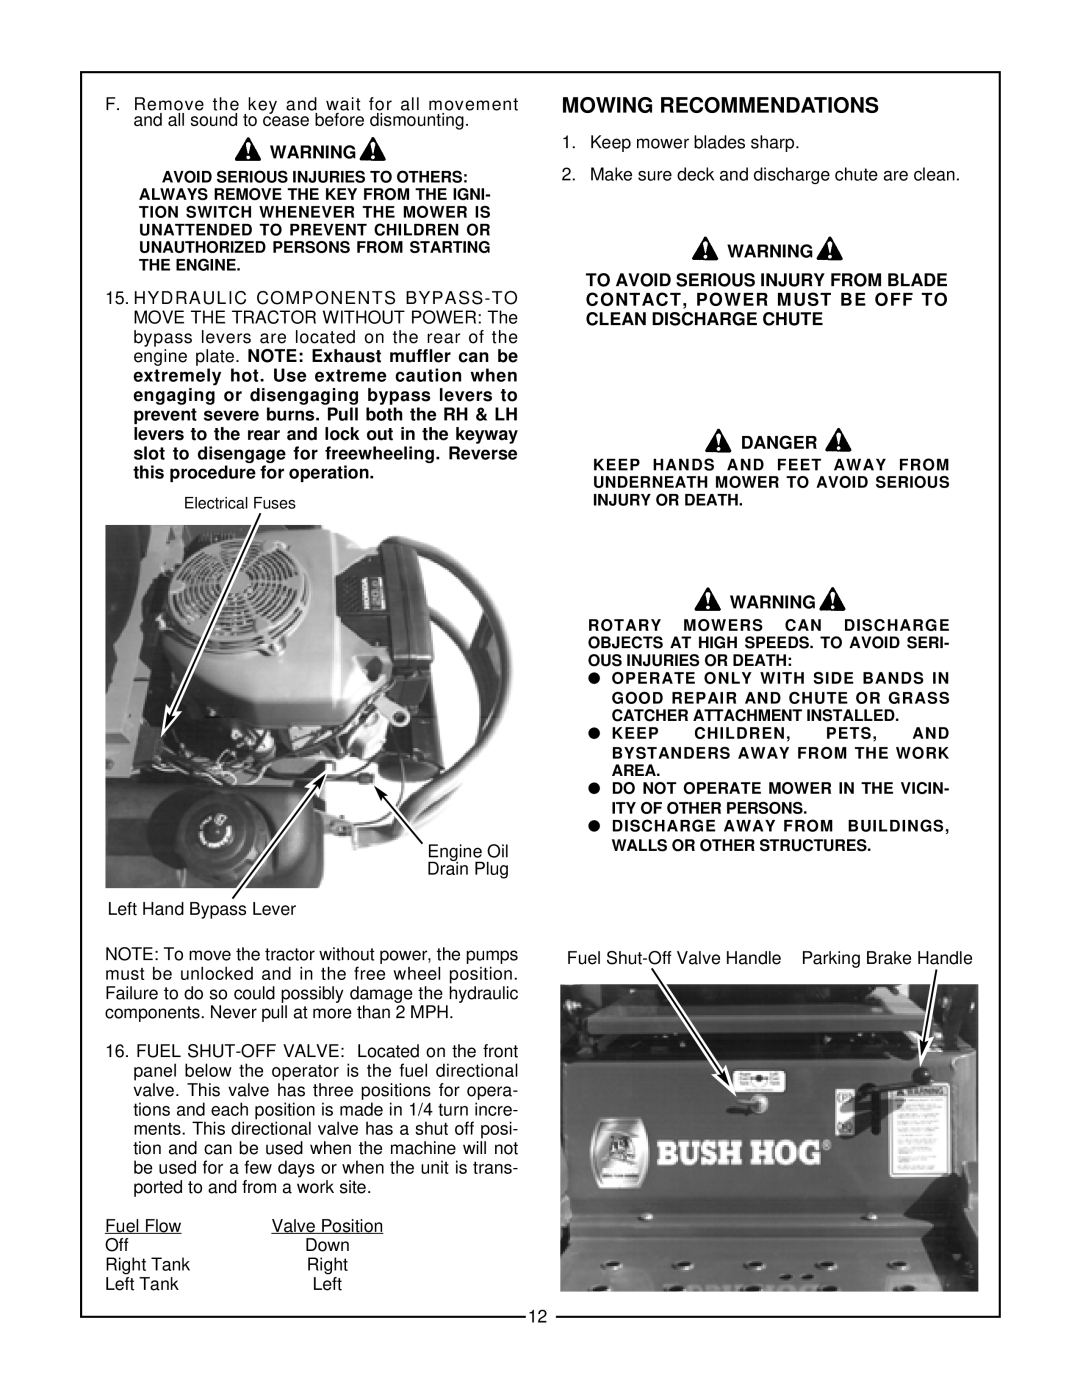 Bush Hog Estate Series manual Mowing Recommendations, Danger 